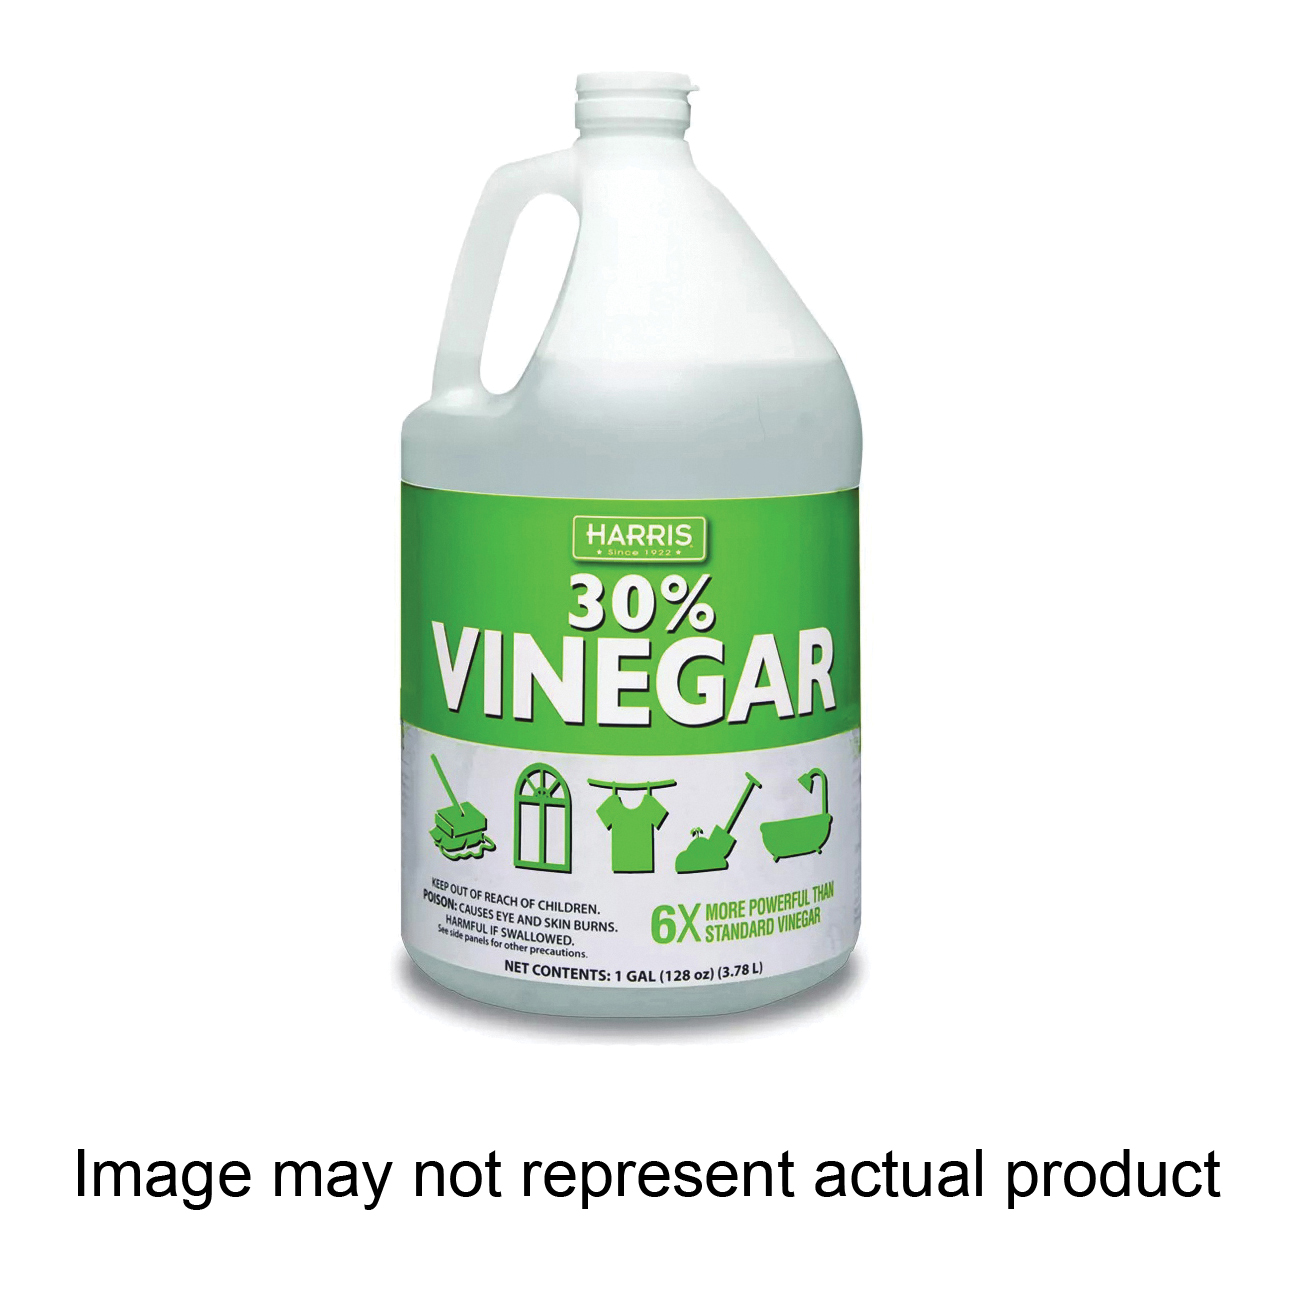 VINE30-32 Industrial Strength Cleaning Vinegar, 32 oz, Liquid, Vinegar/Pungent, Clear